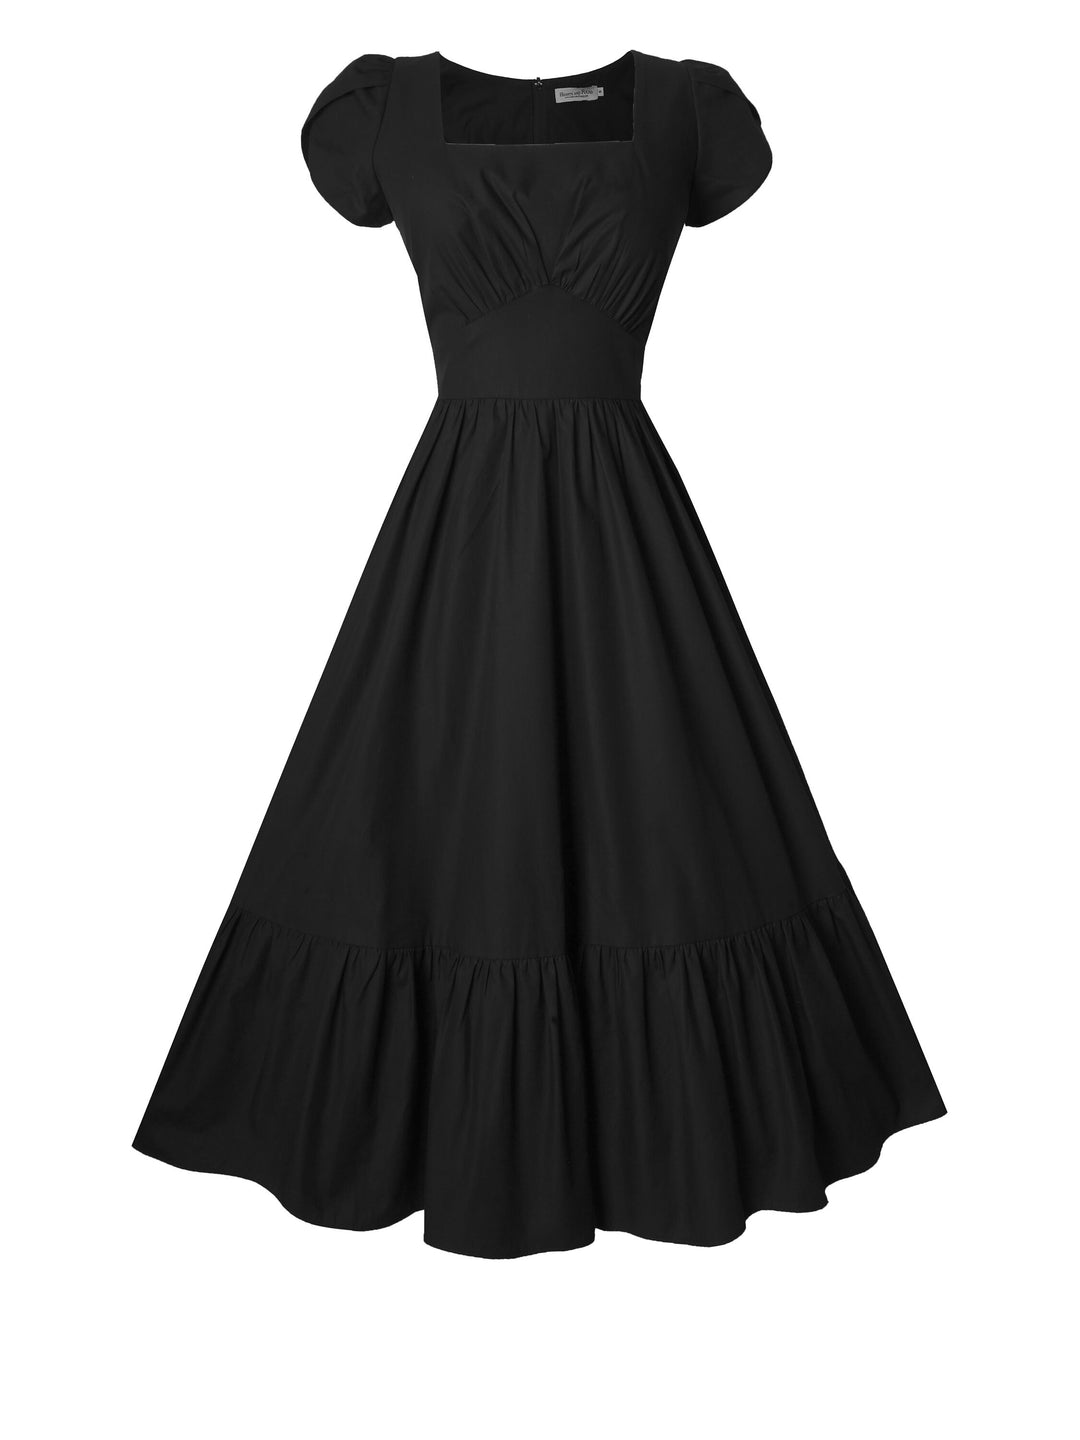 RTS - Size S - Ava Dress in Raven Black Cotton